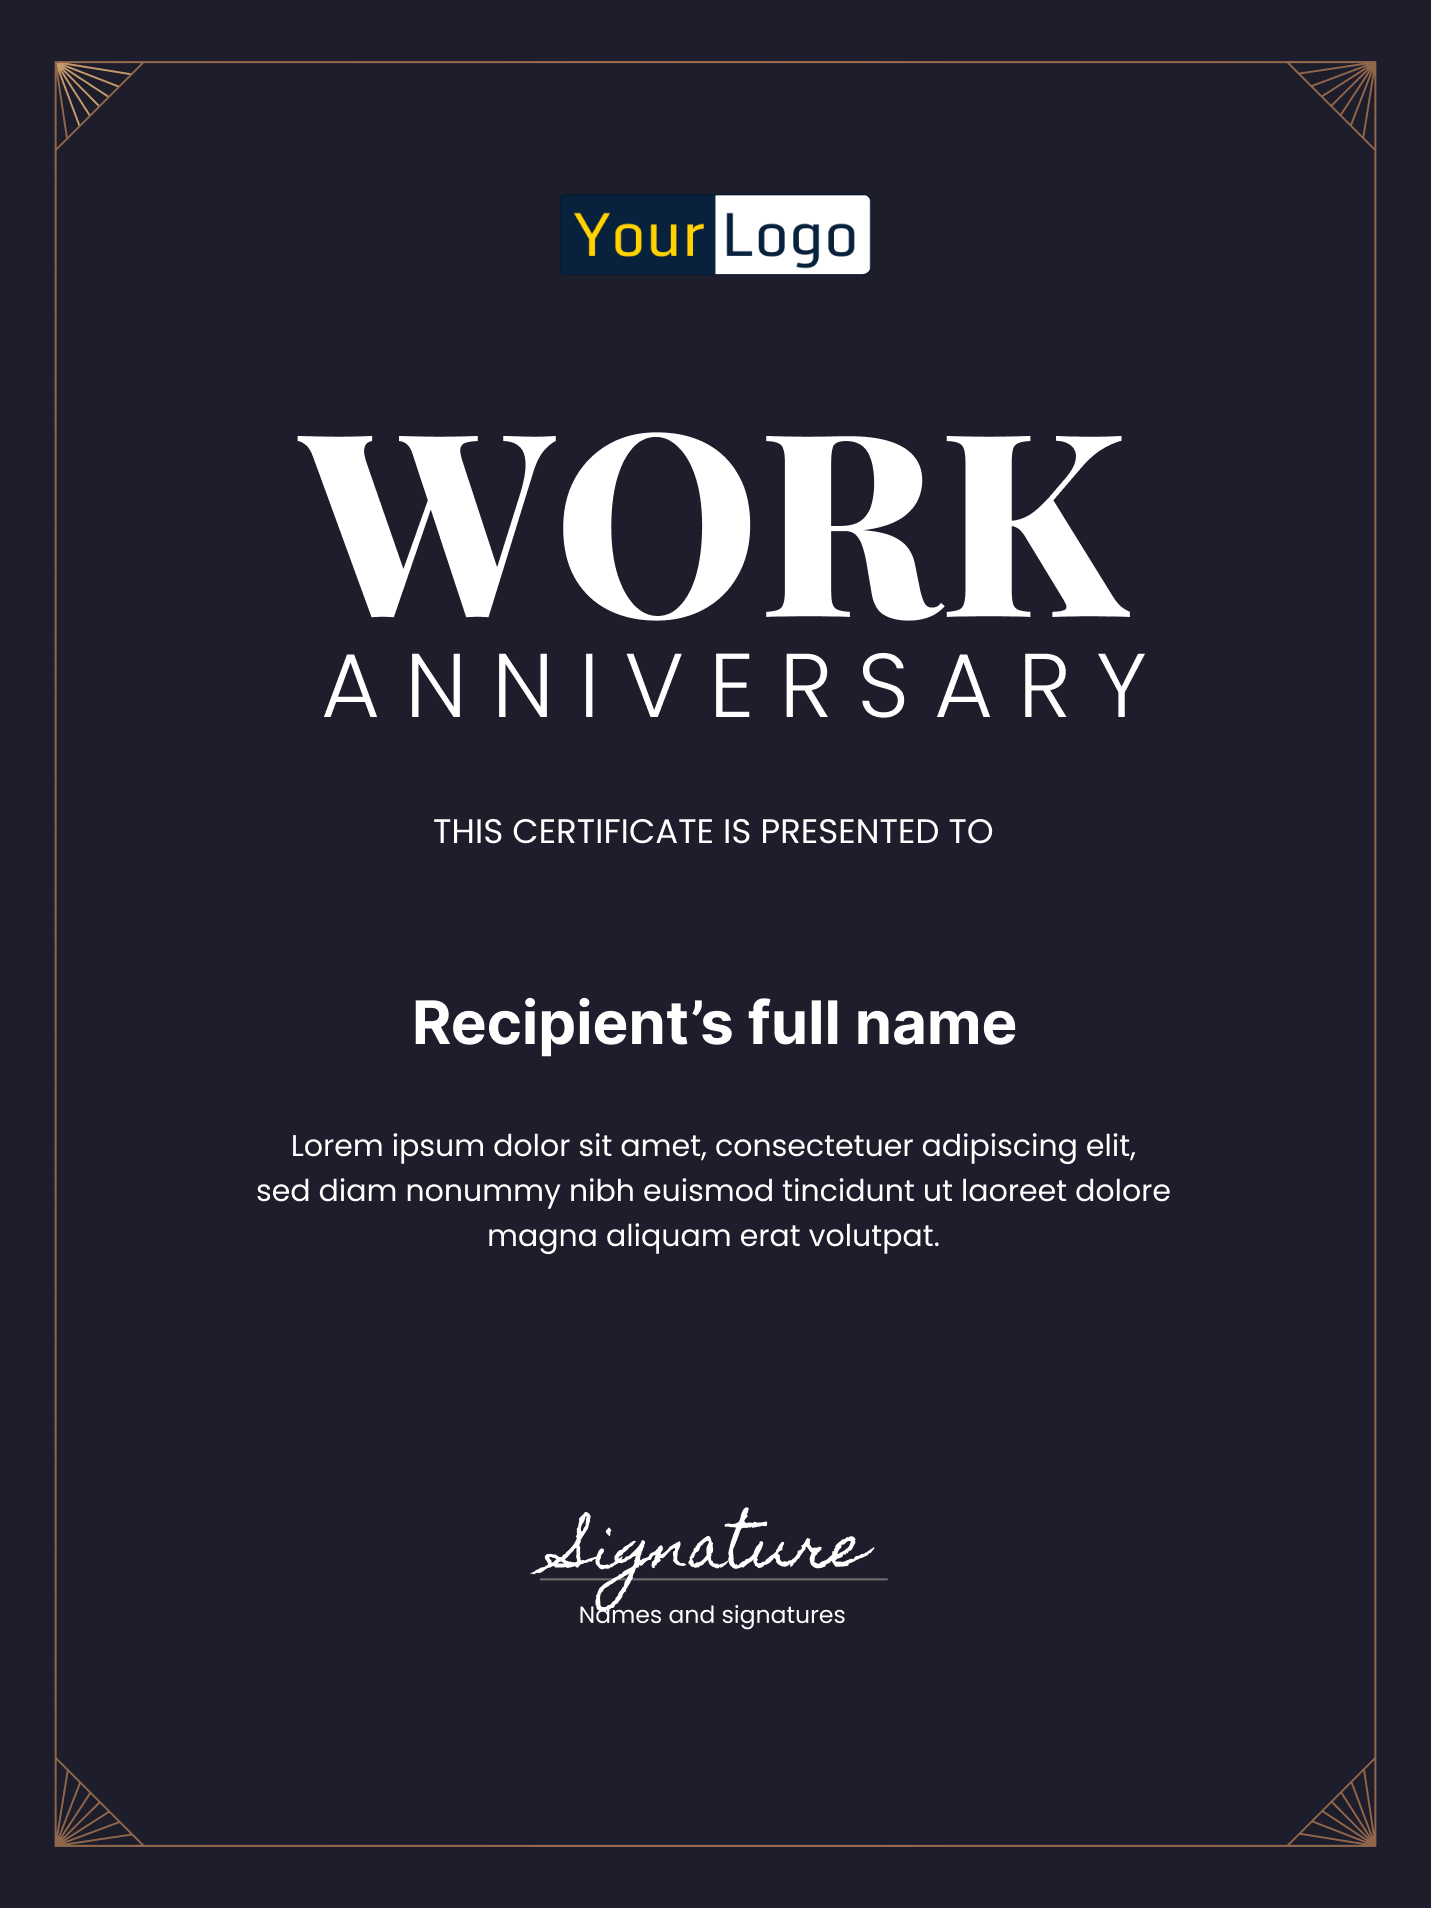 10 FREE Work Anniversary Certificate Templates  Virtualbadge